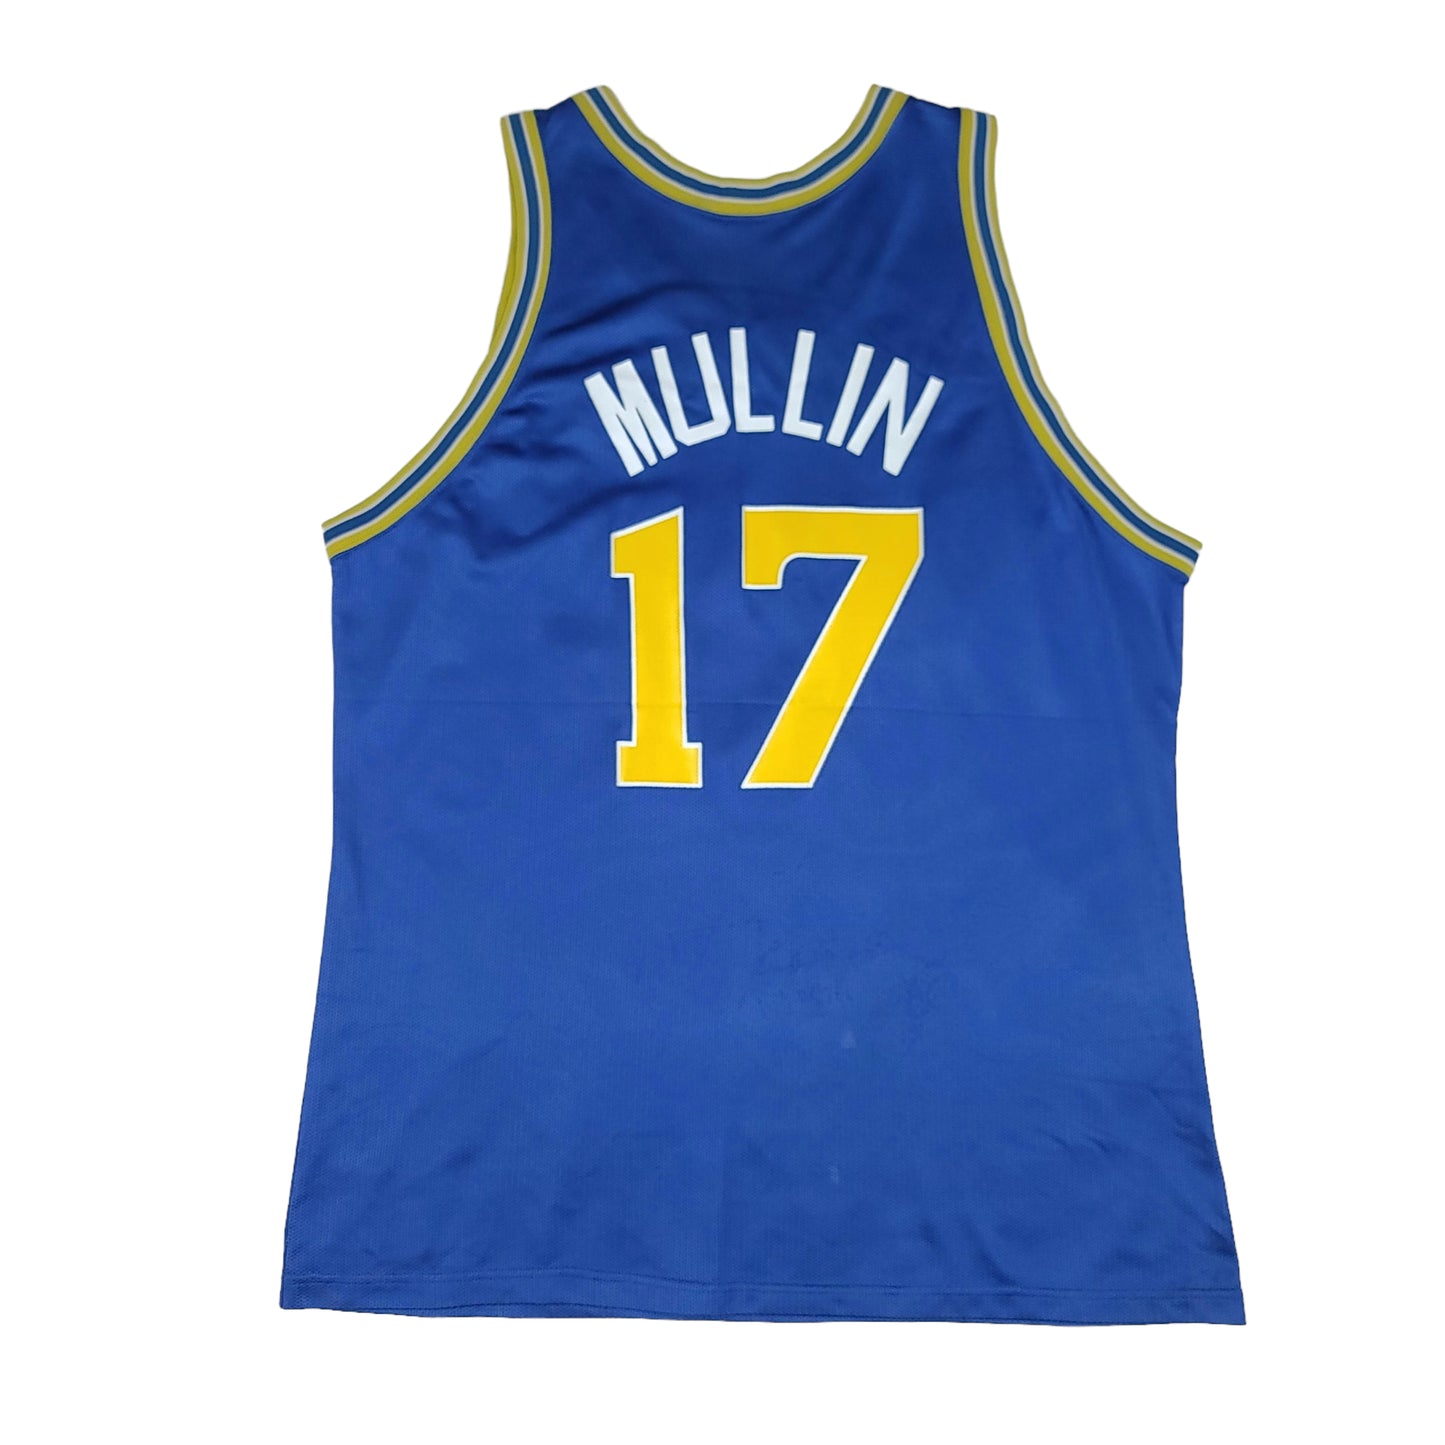 Vintage Chris Mullen Golden State Warriors Champion Basketball Jersey